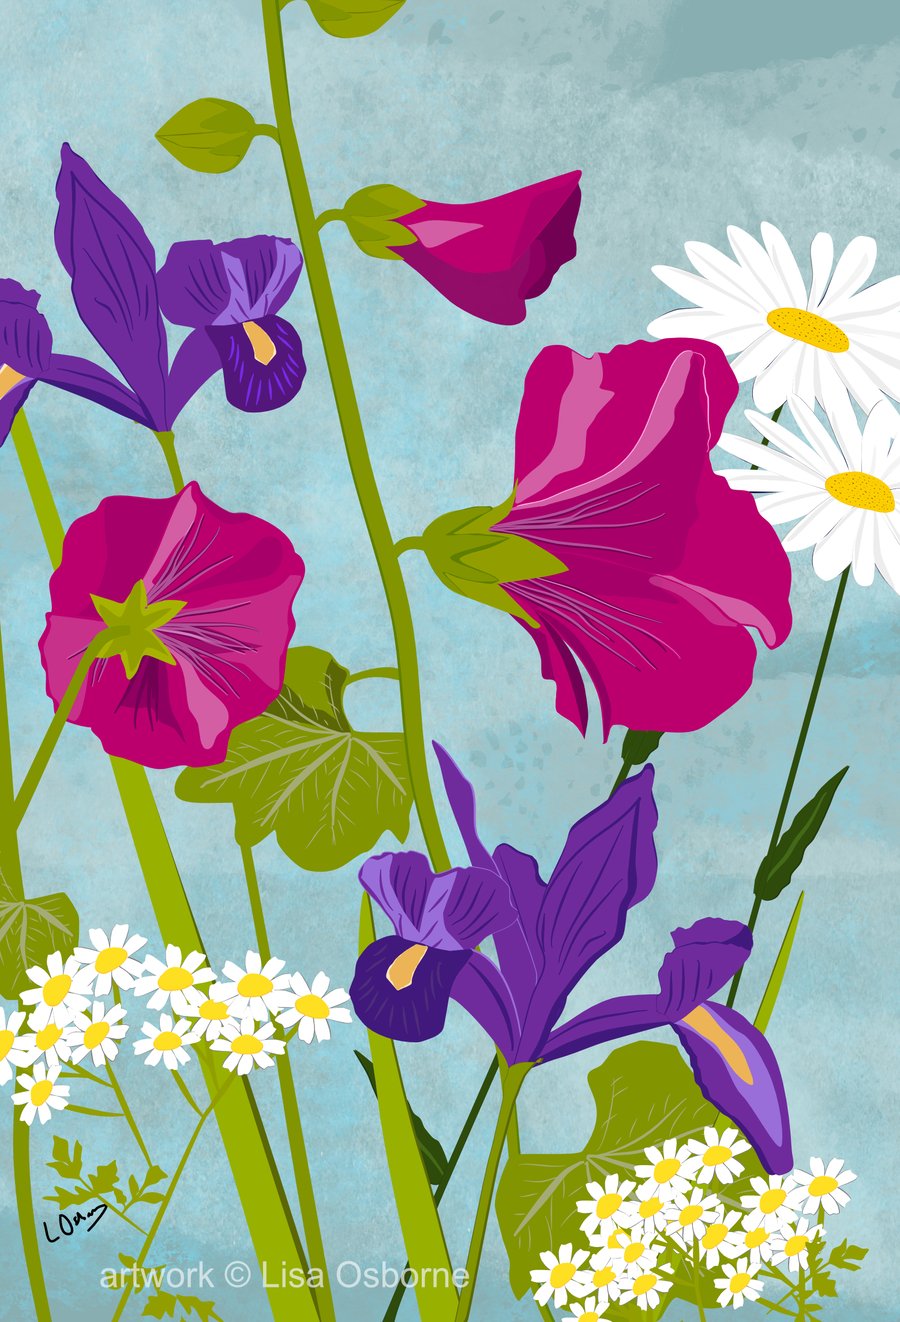 Hollyhocks - flower print - flower art - irises